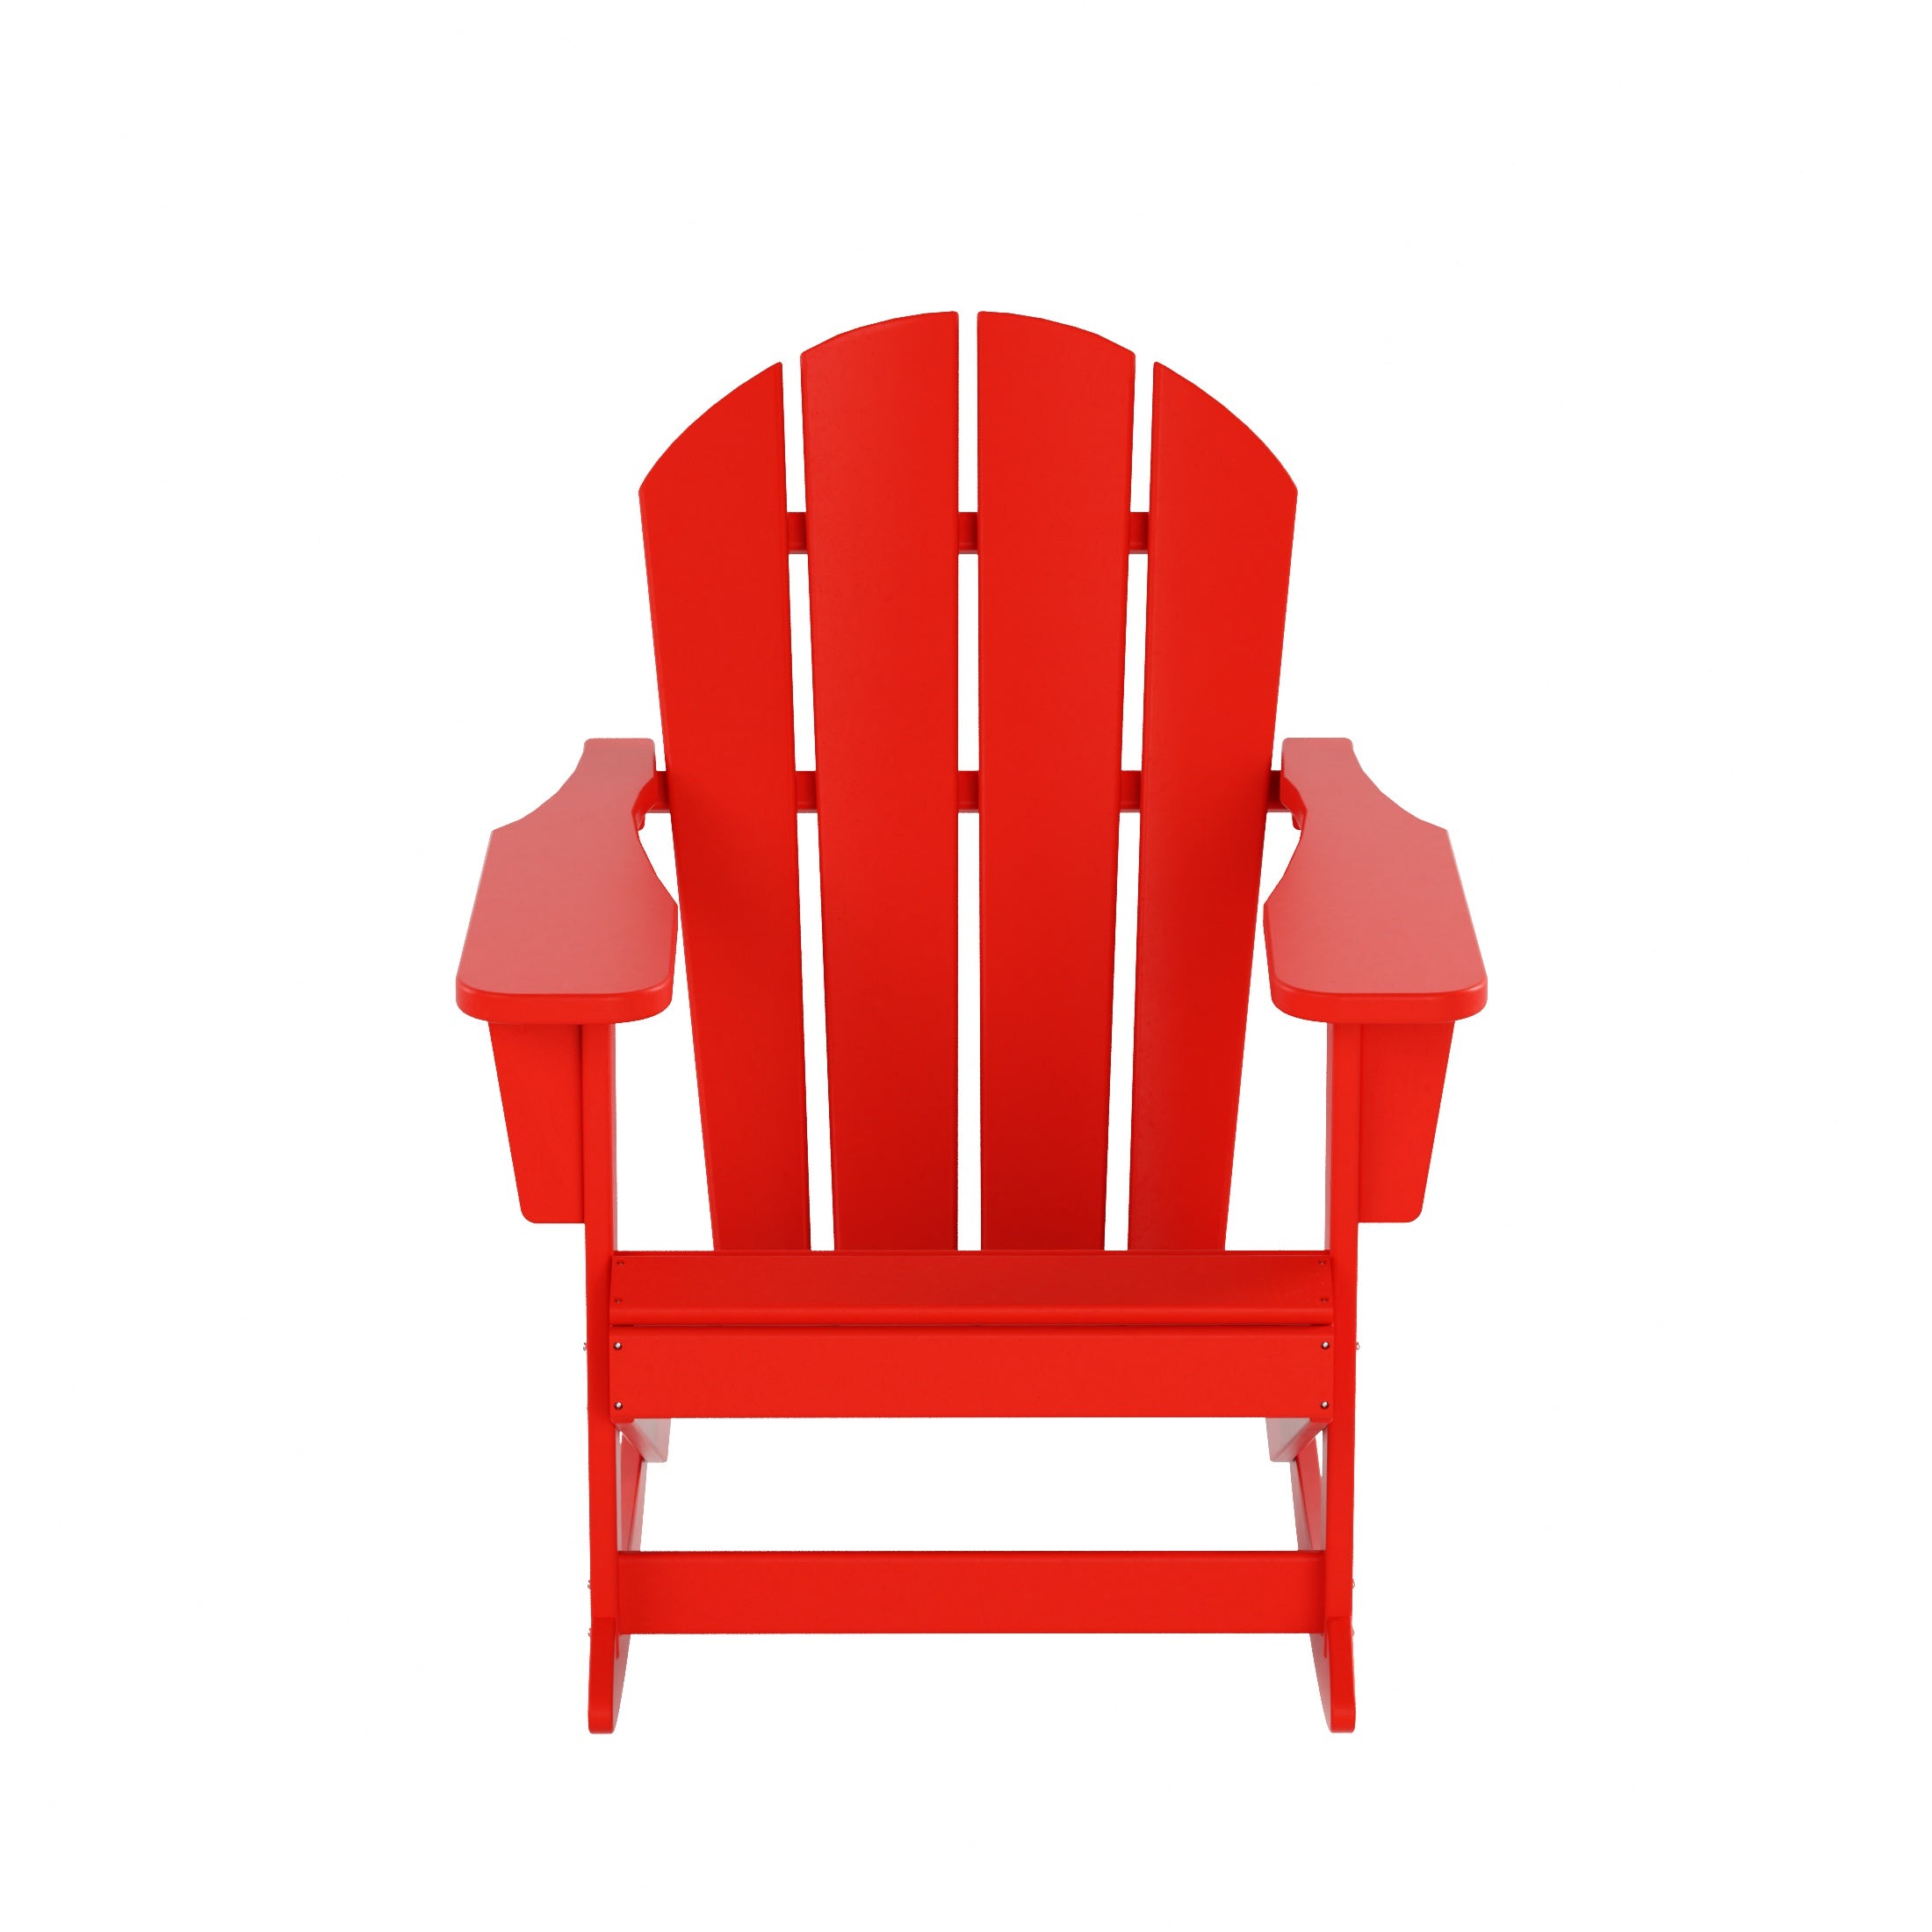 Malibu Outdoor Patio Porch Rocking Adirondack Chair (Set of 2)